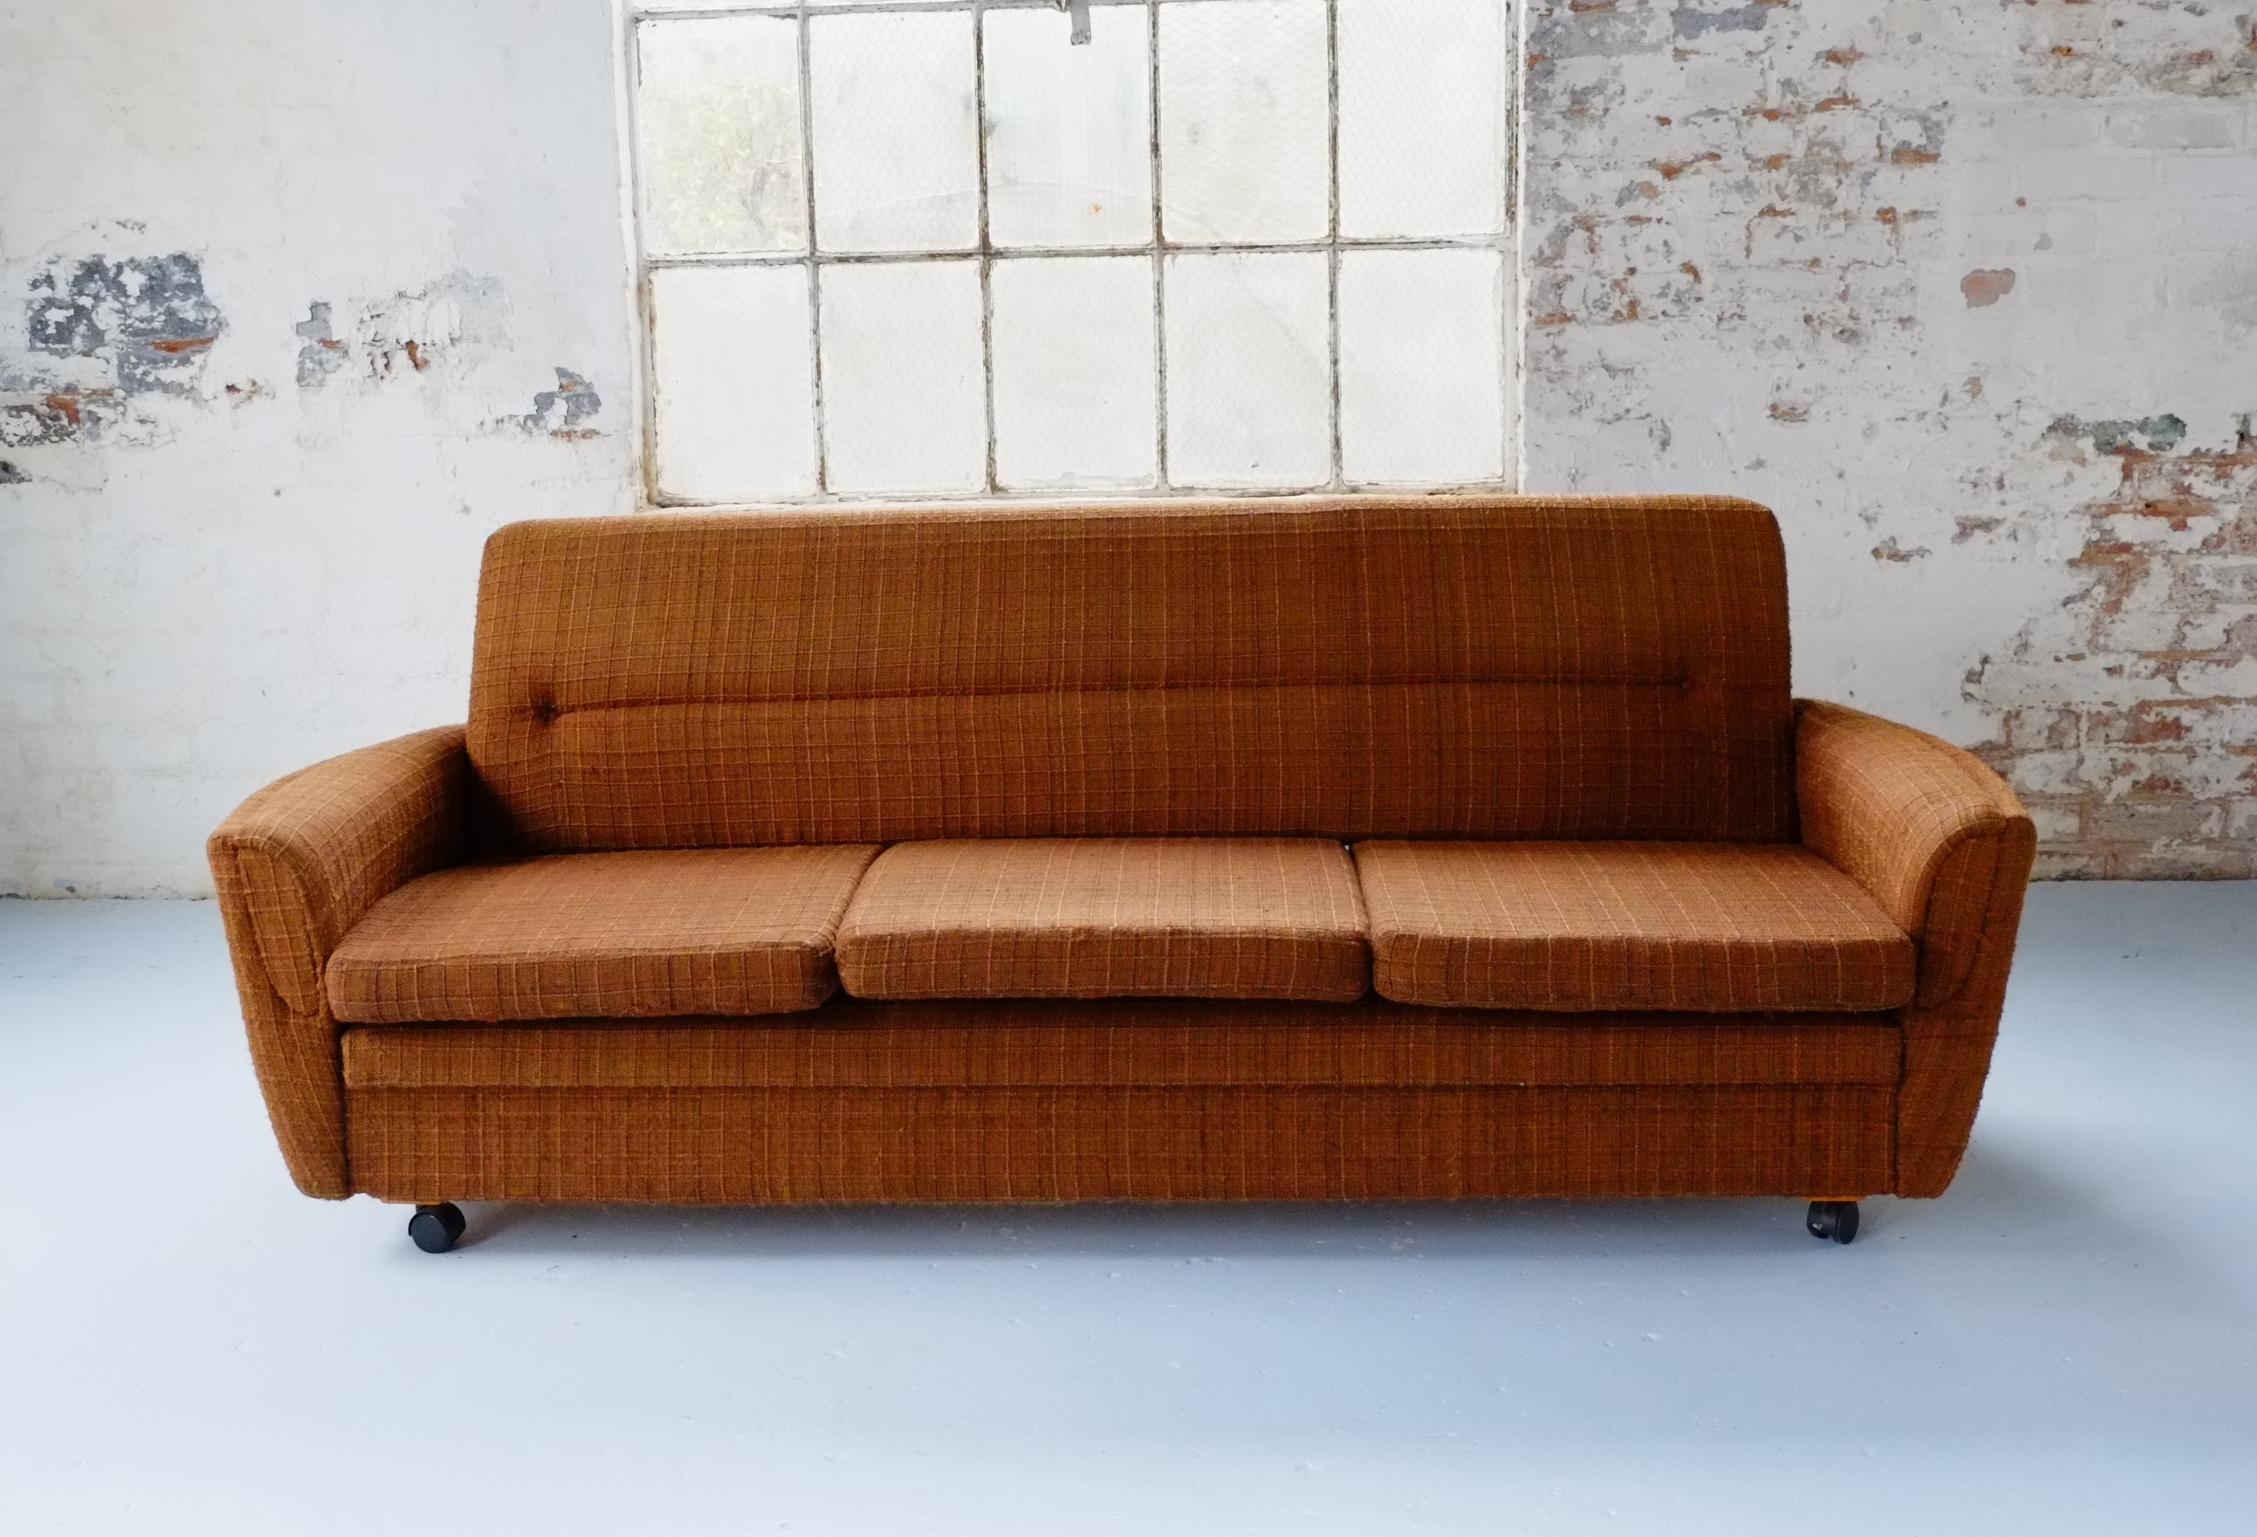 Classic 70's Vintage British Brown Sofa Bed Settee on Castors 9